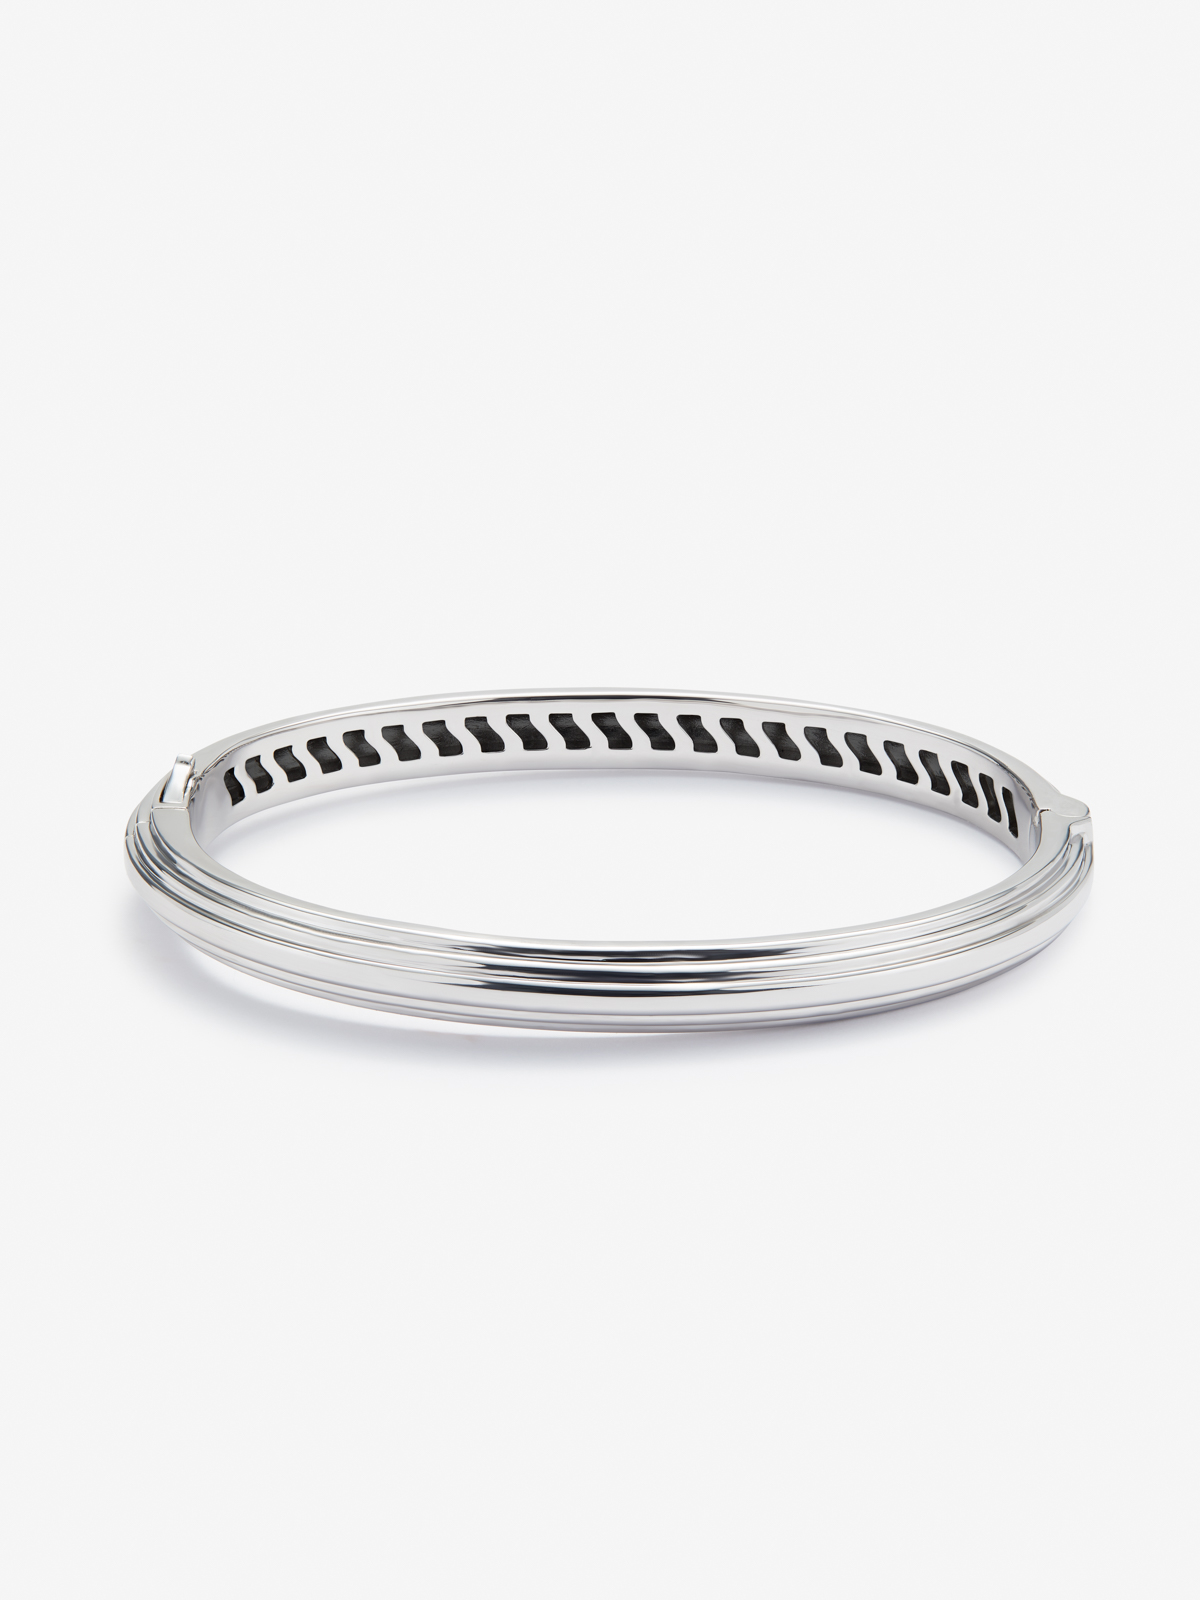 Rigid 925 silver bracelet